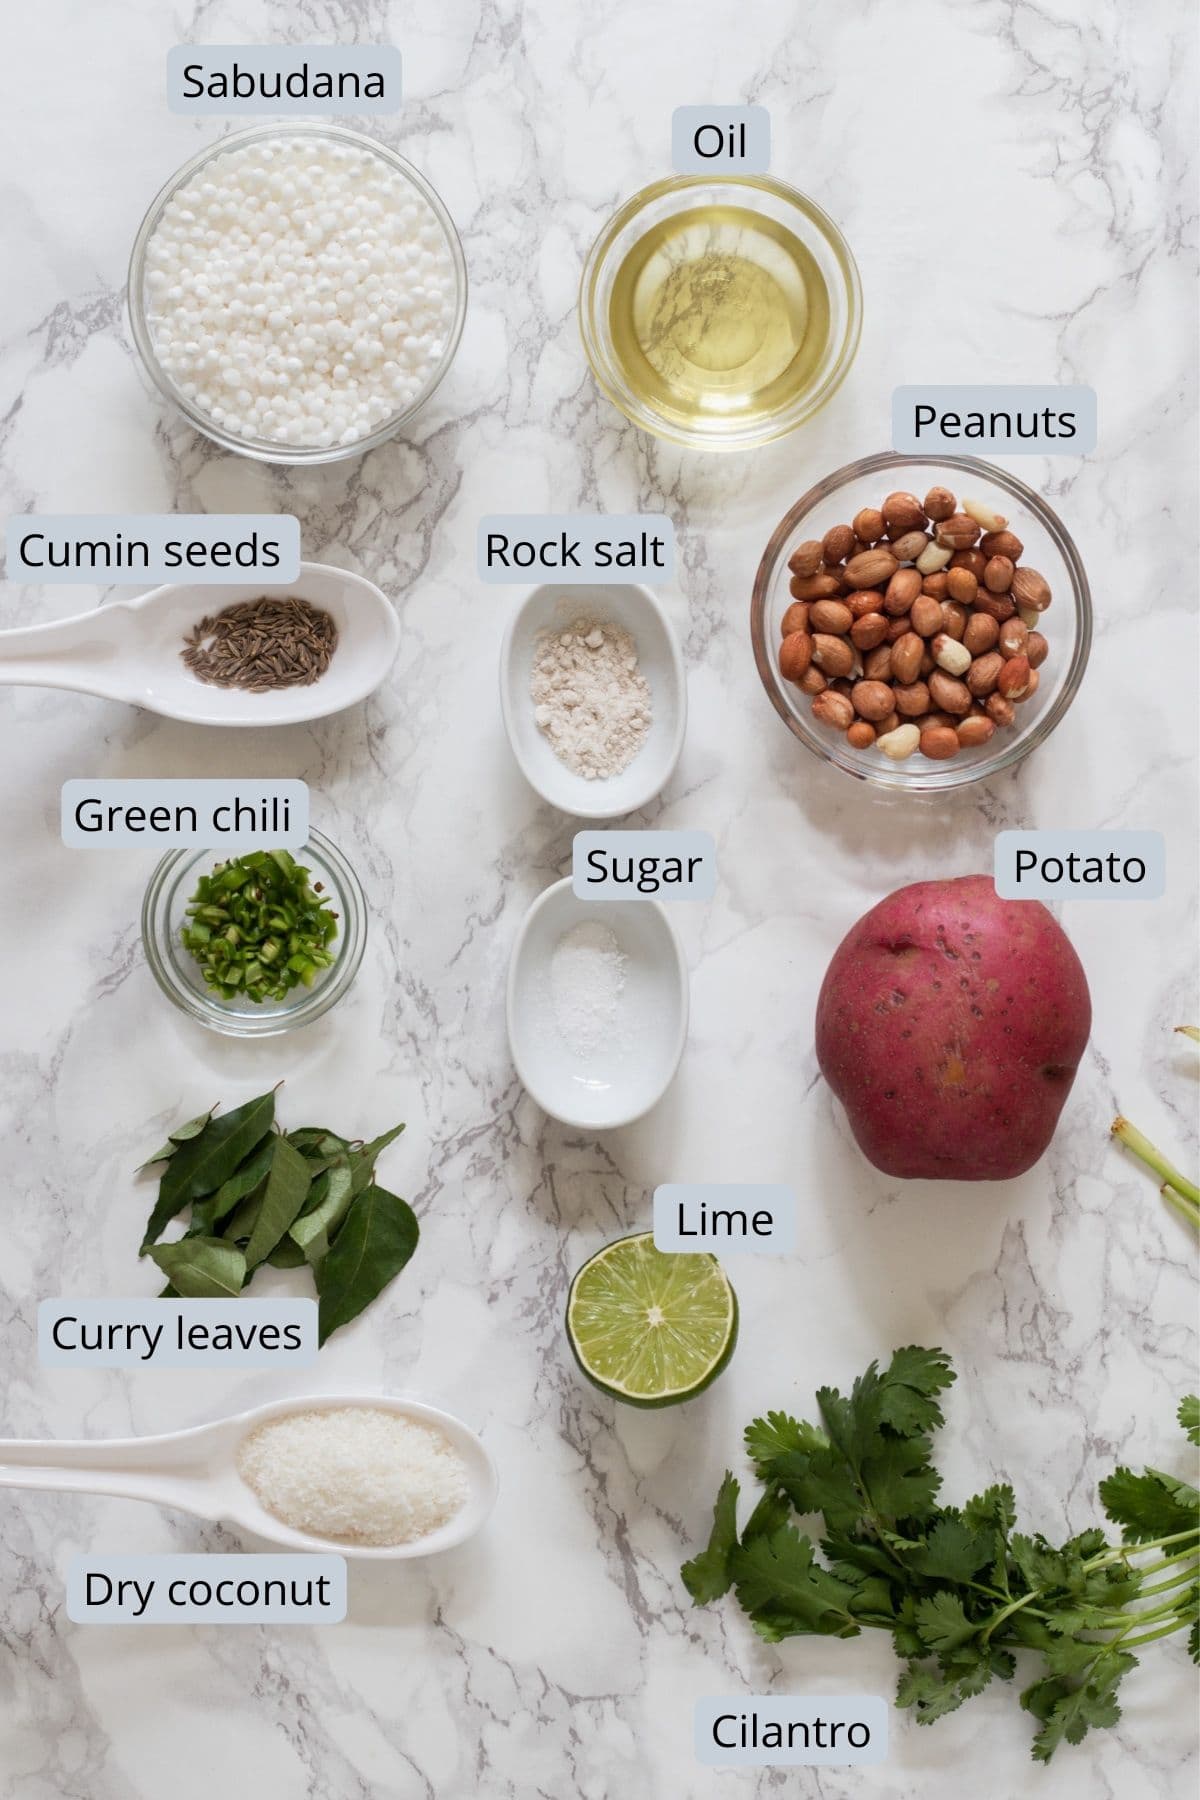 ingredients used in sabudana khichdi includes tapioca, potato, oil, cumin seeds, peanuts, coconut, green chili, curry leaves, salt, sugar, lime and cilantro.